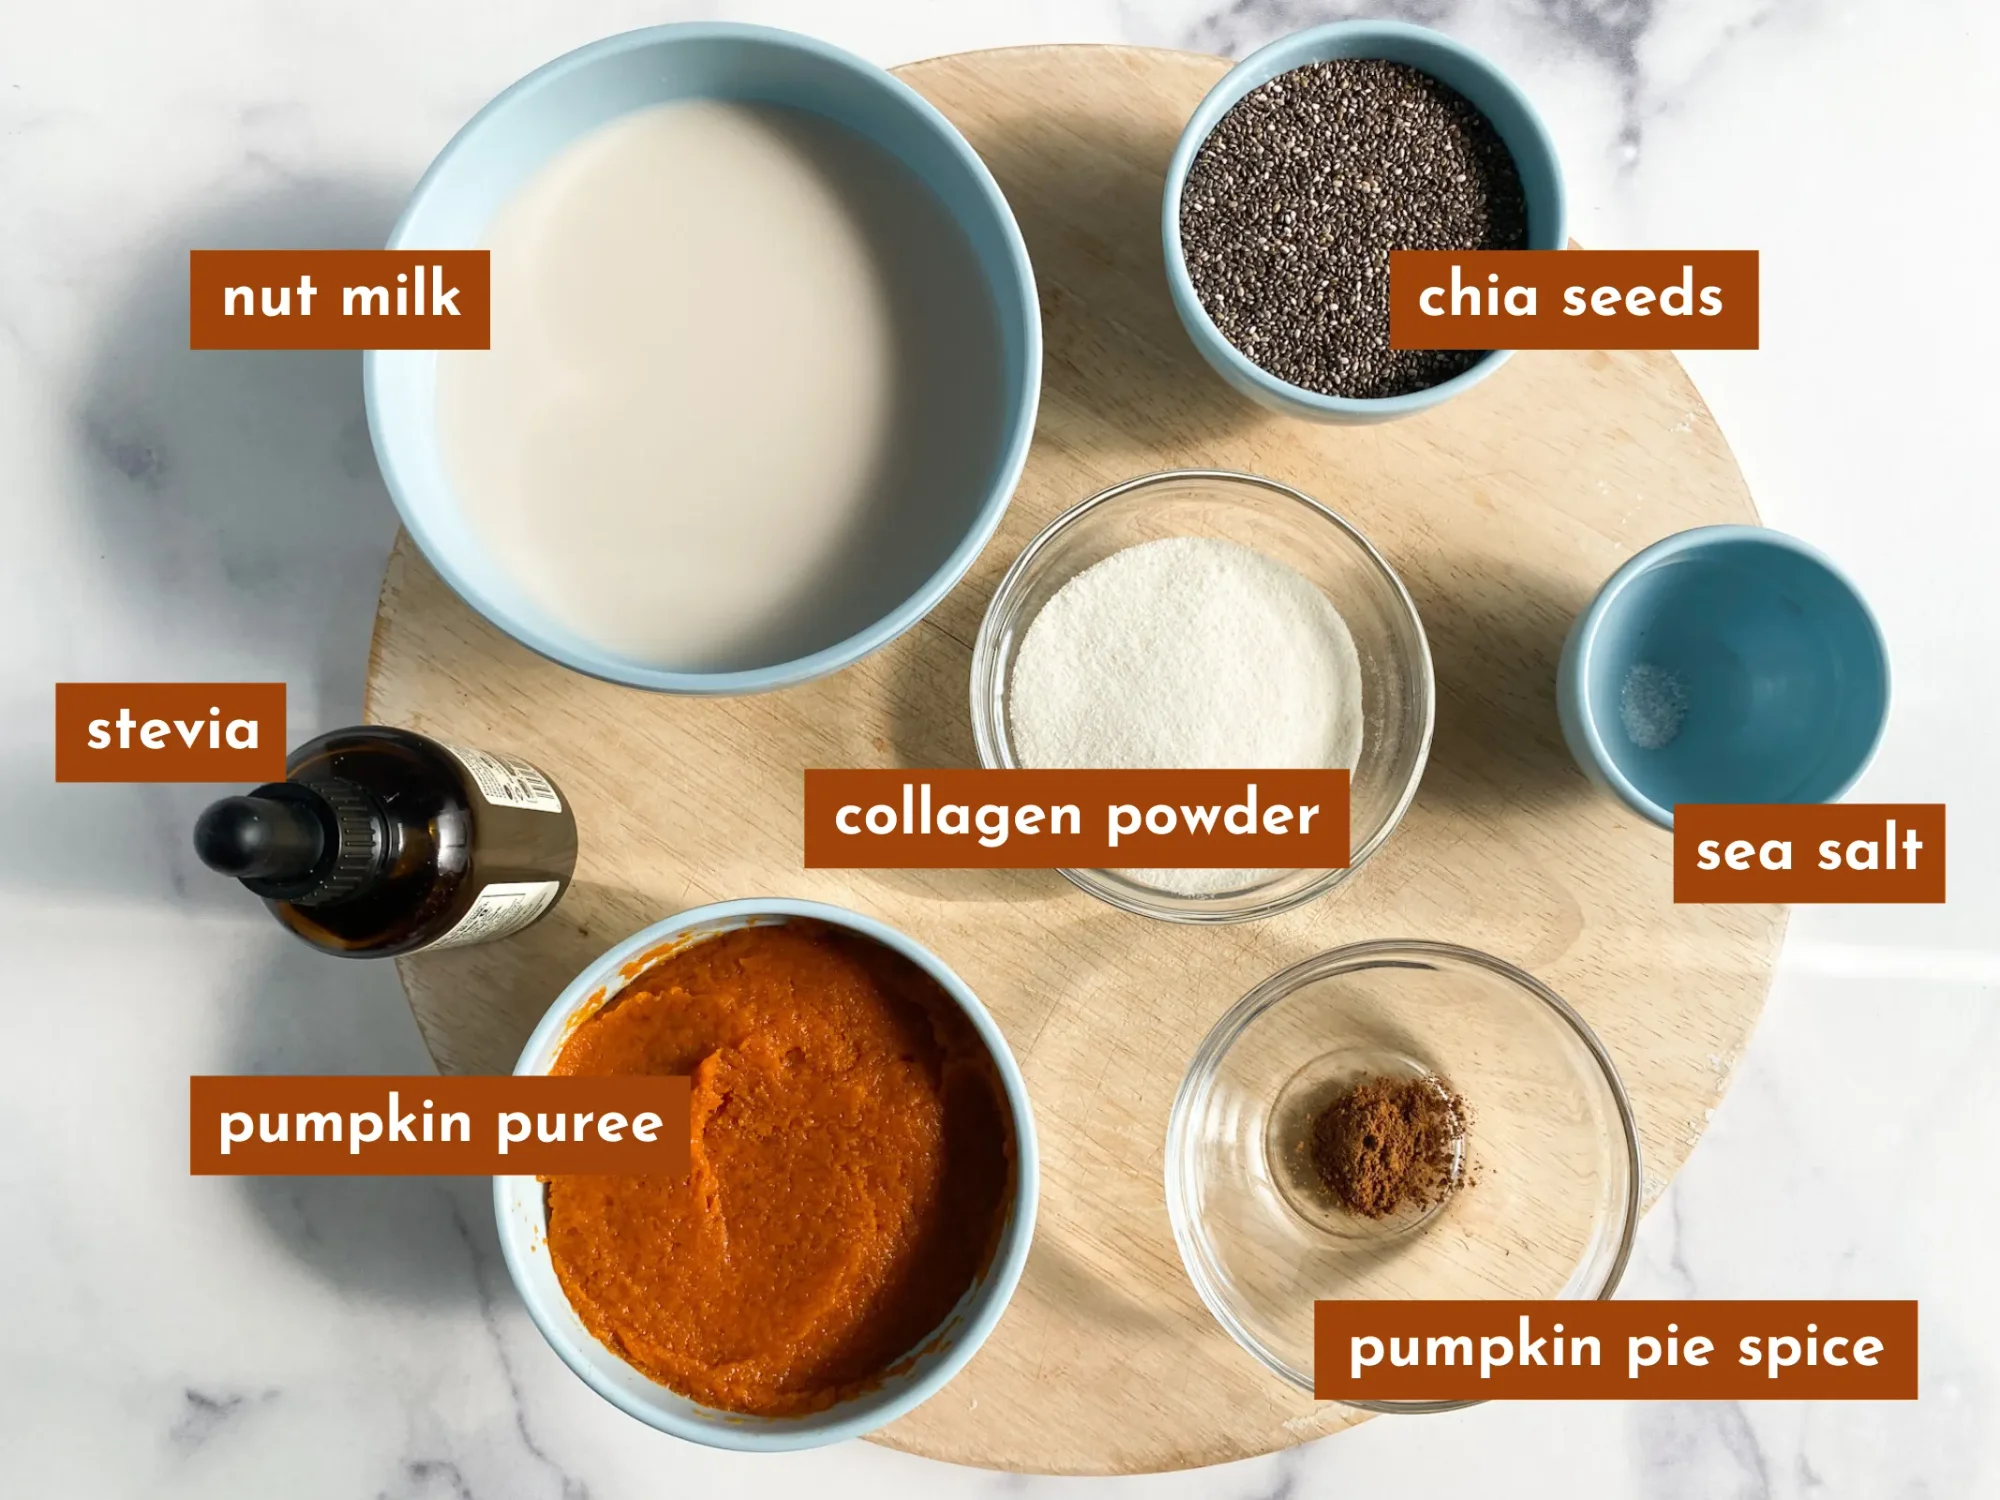 Ingredients for Paleo Pumpkin Chia Seed Pudding: Nut milk, pumpkin puree, liquid stevia, chia seeds, collagen powder, pumpkin pie spice, and sea salt